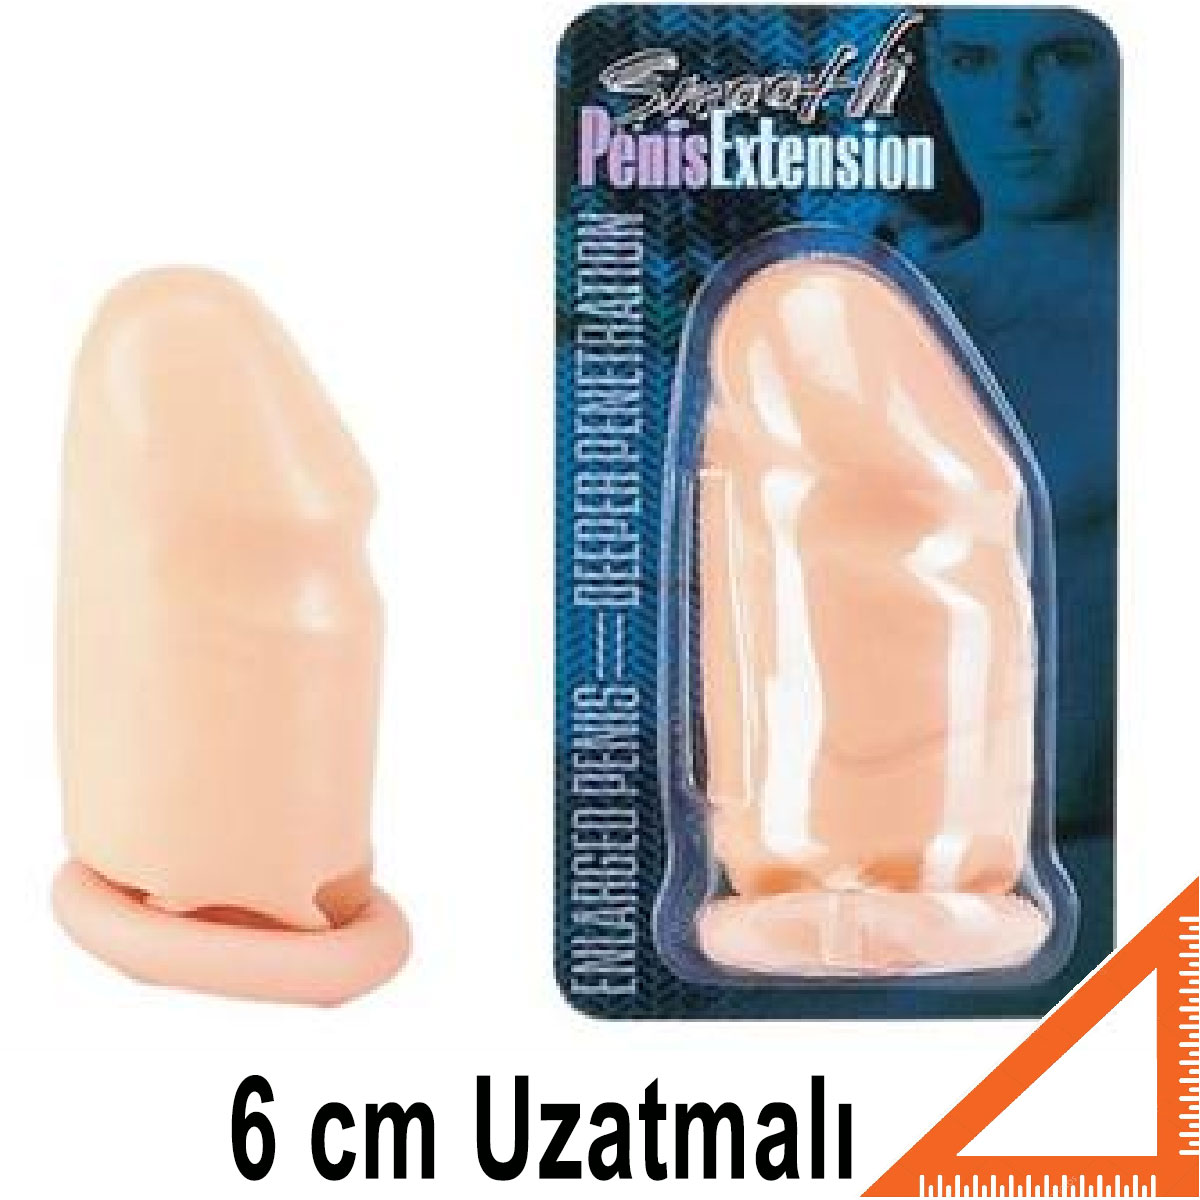 The Extender Ten Rengi Titresimli 6 cm Uzatmali Prezervatif AL-41-1720-02